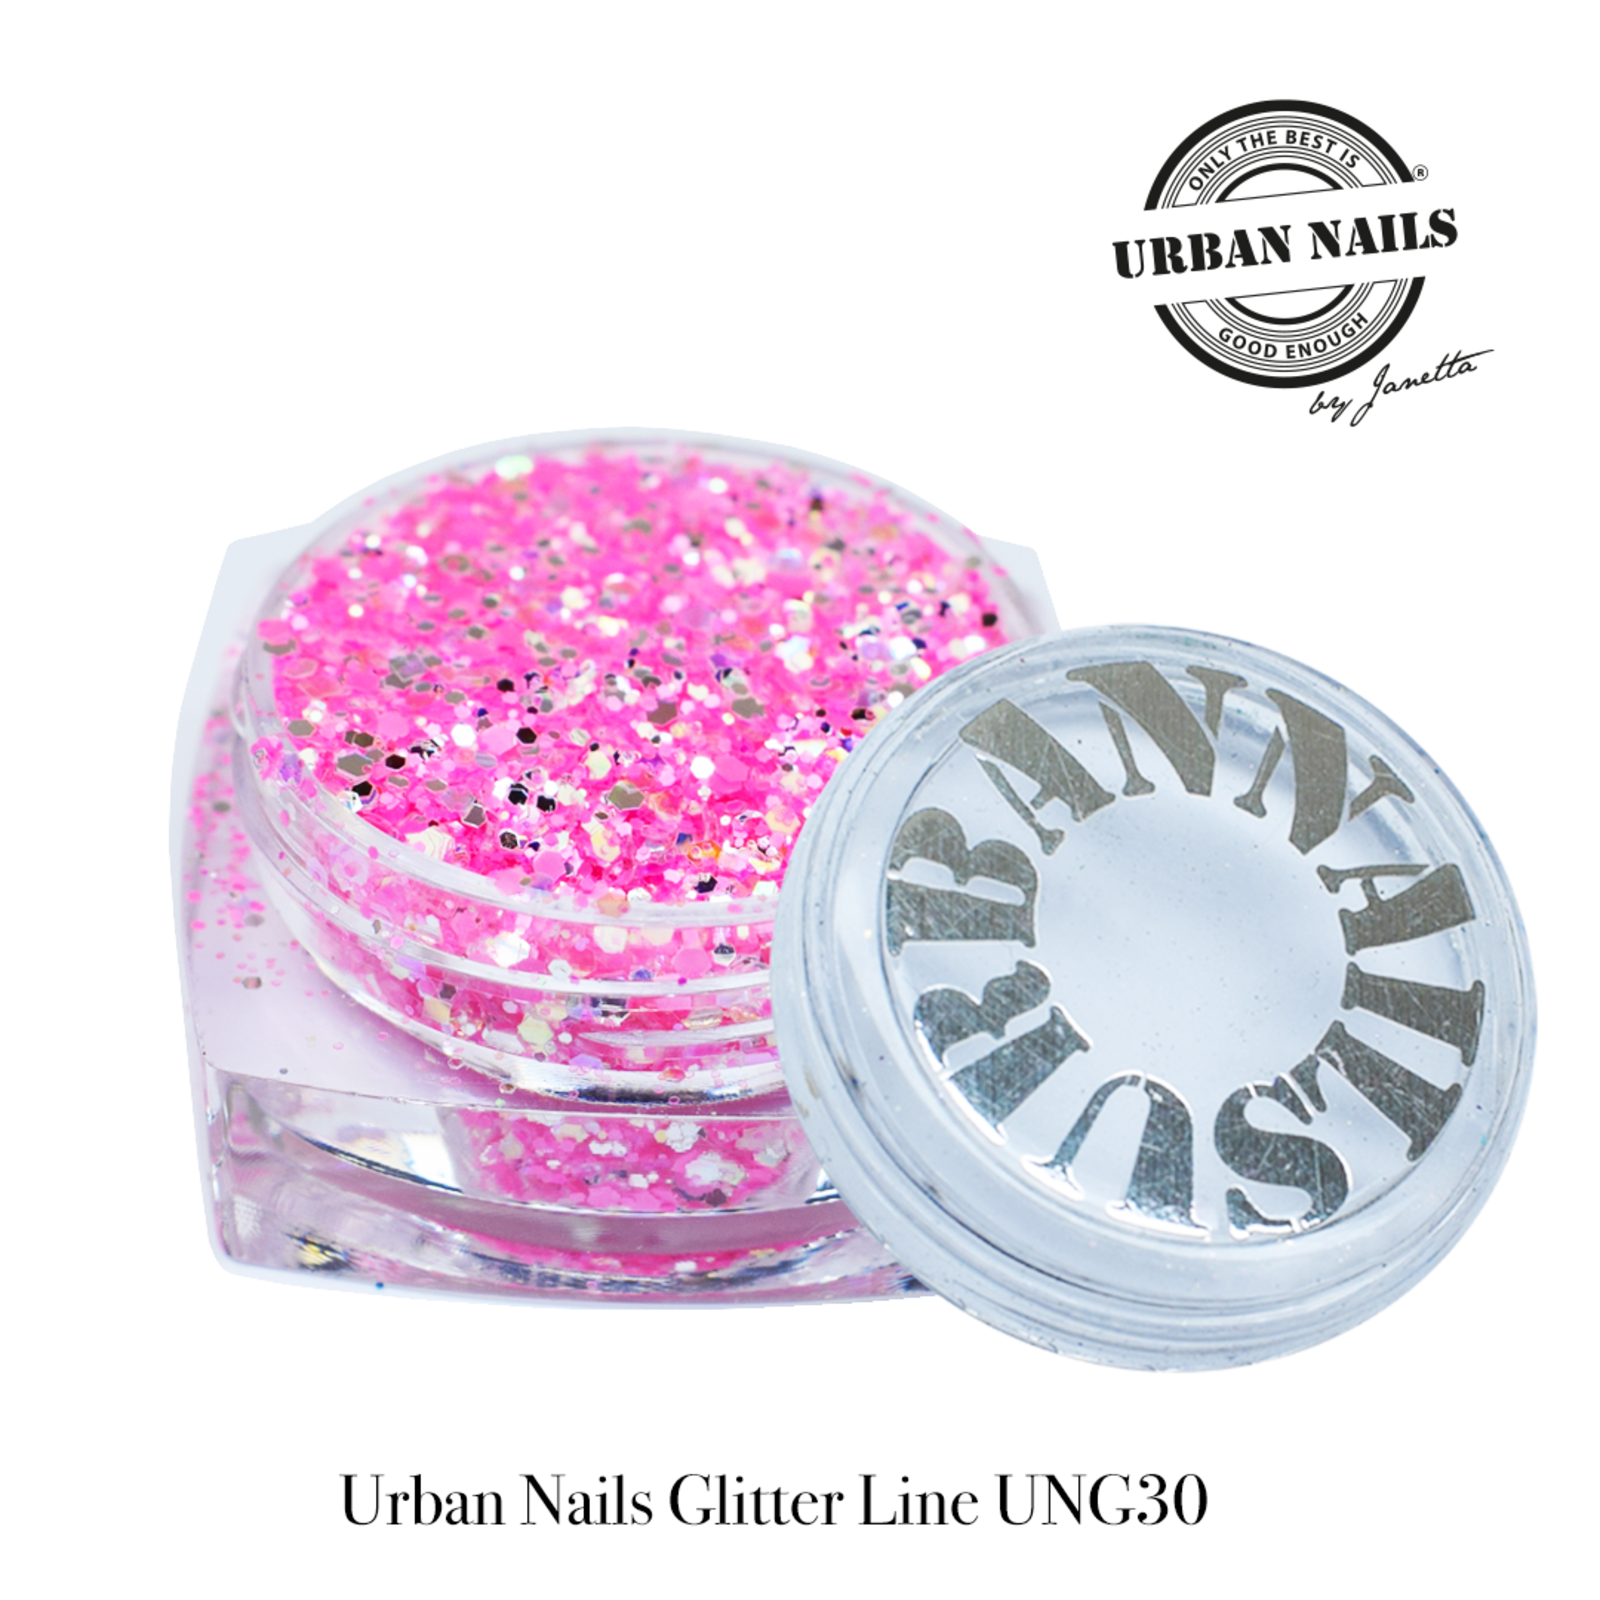 Urban nails Glitter Line UNG30